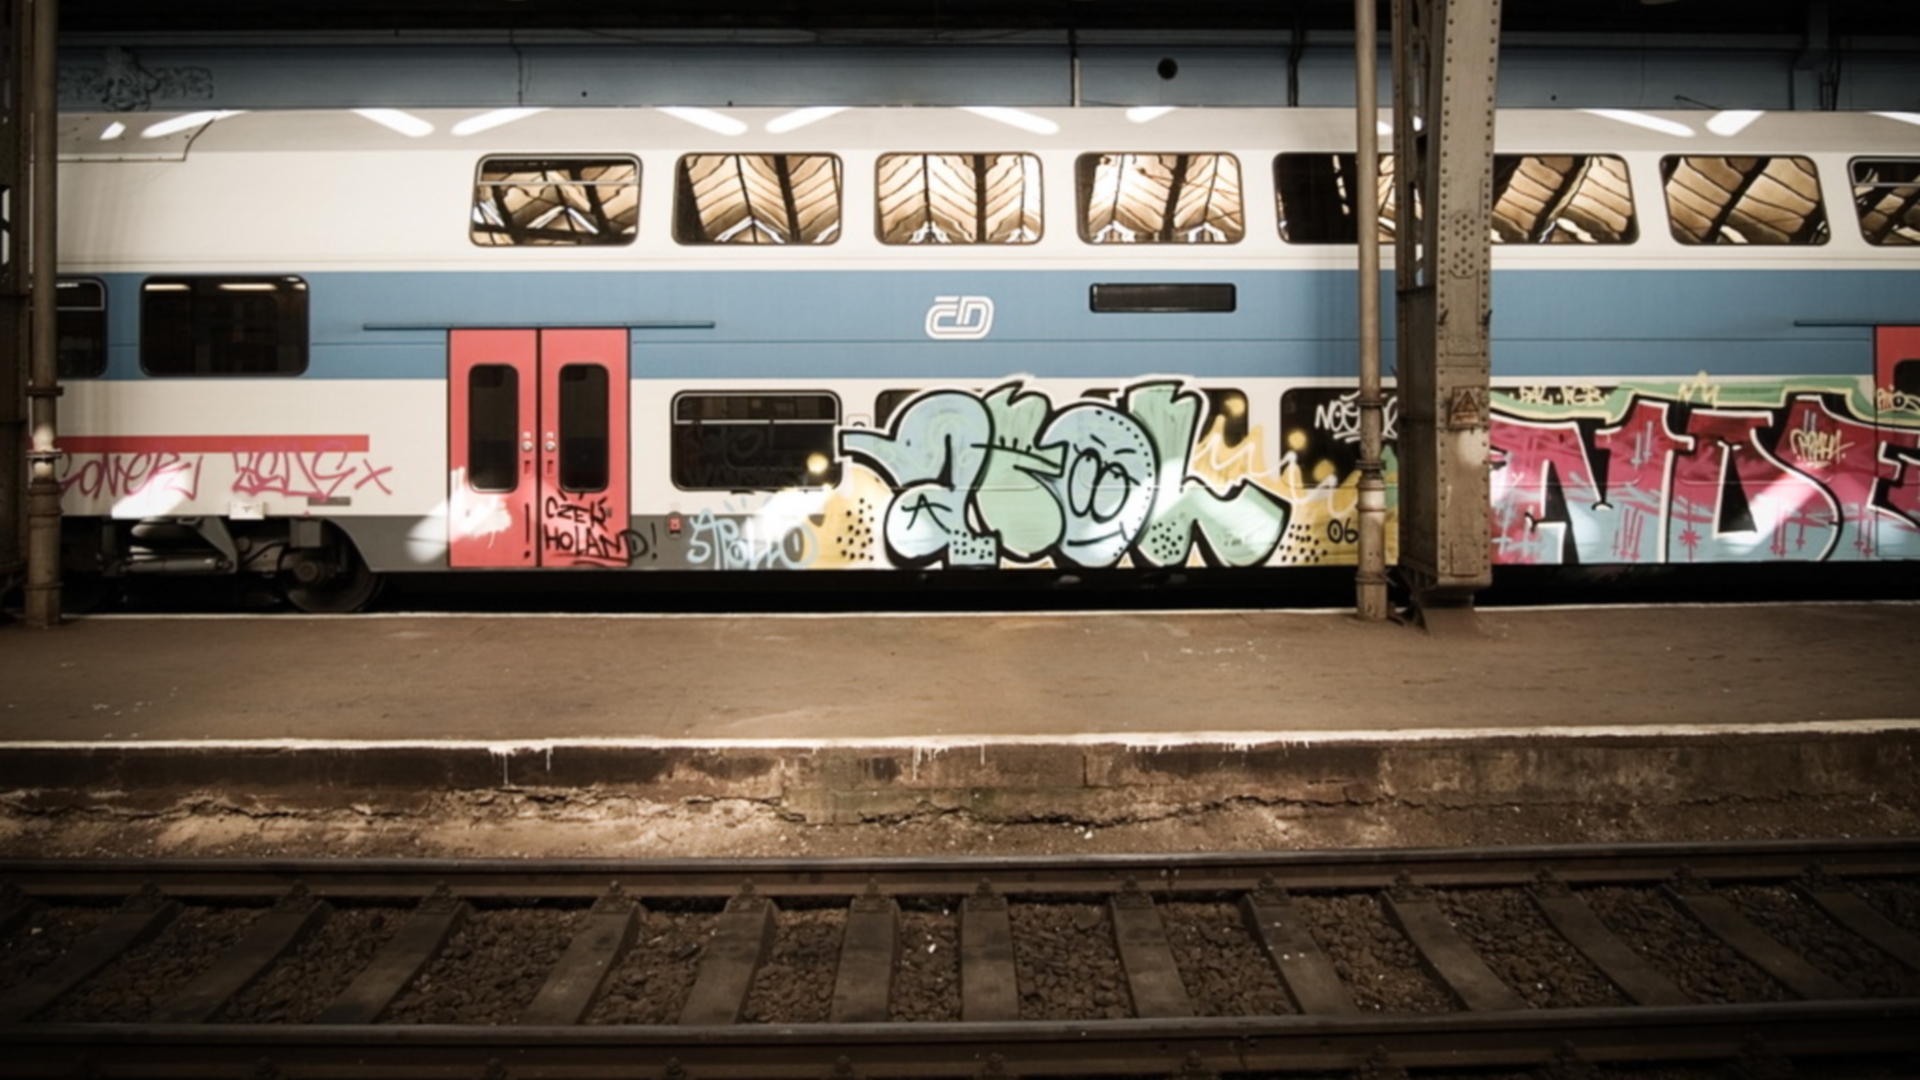 Wallpapers train graphite railway on the desktop